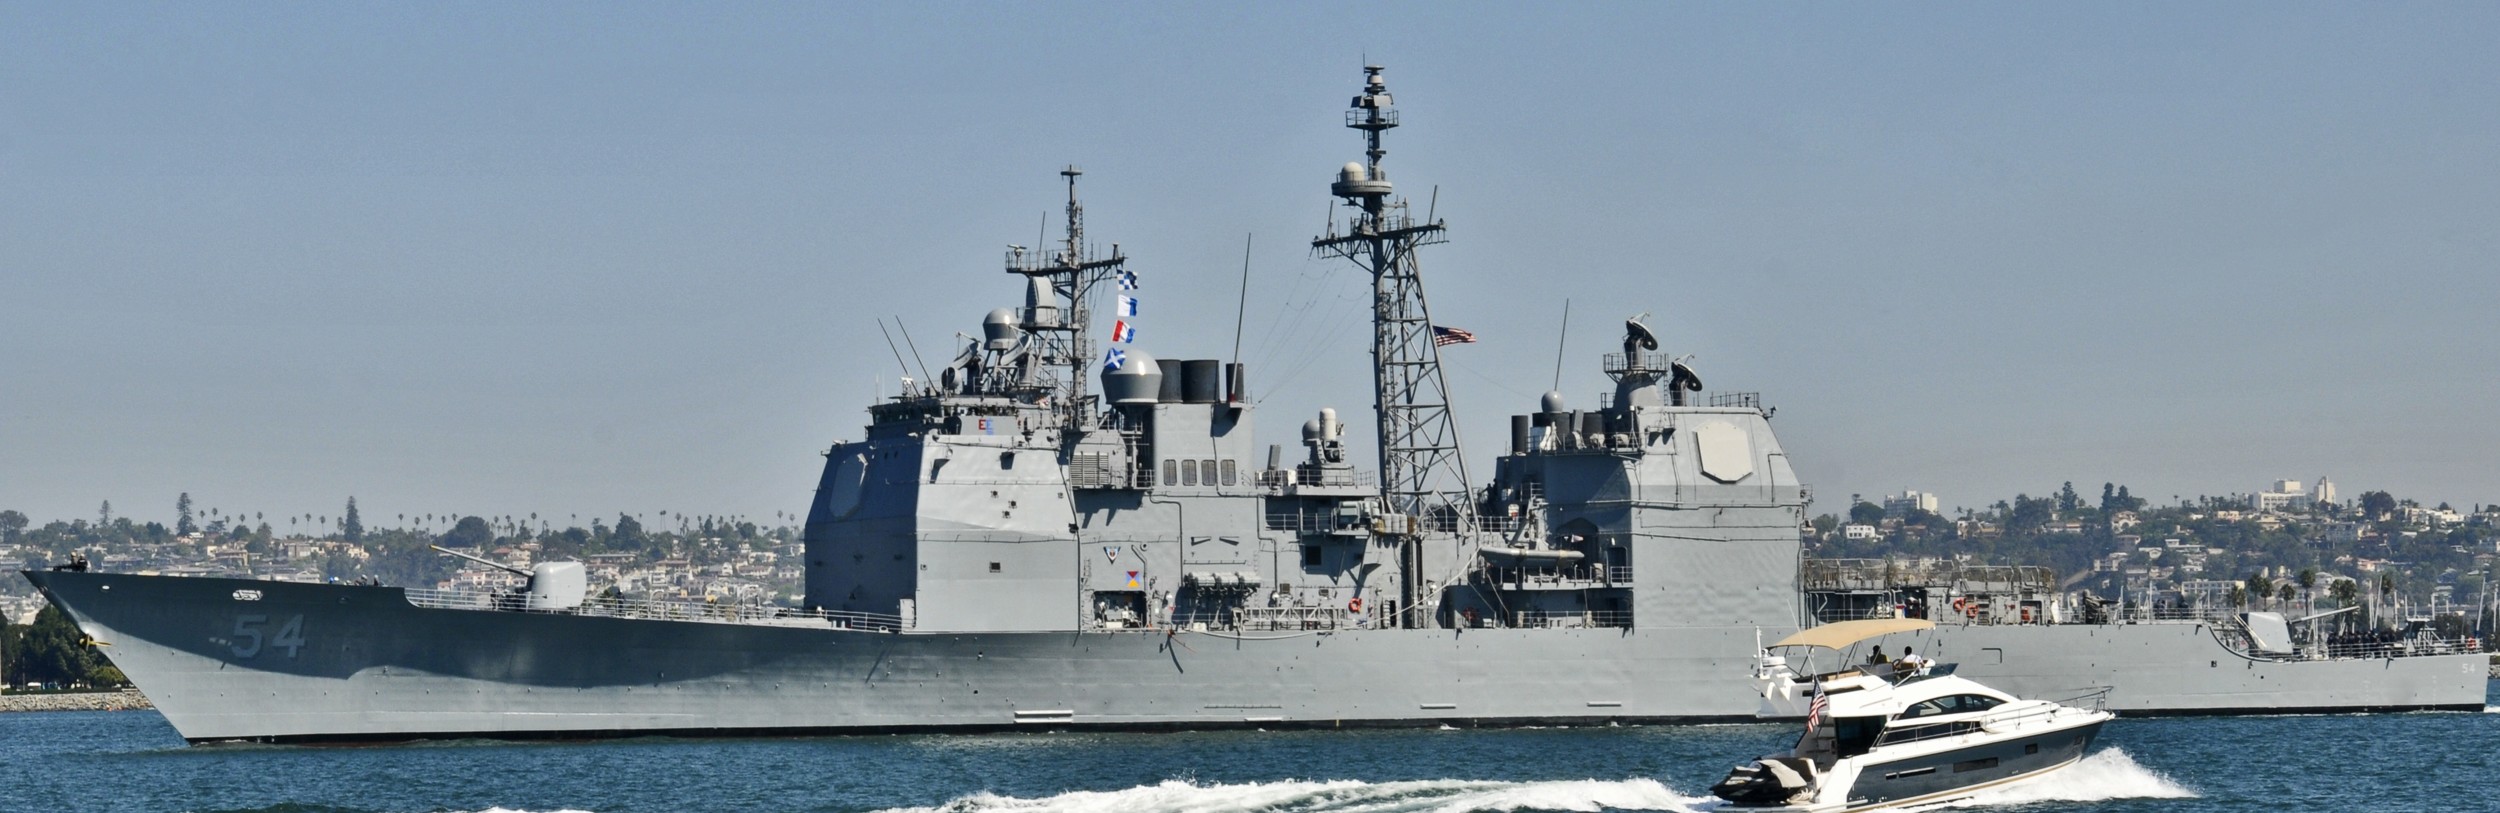 cg-54 uss antietam ticonderoga class guided missile cruiser aegis us navy san diego 41